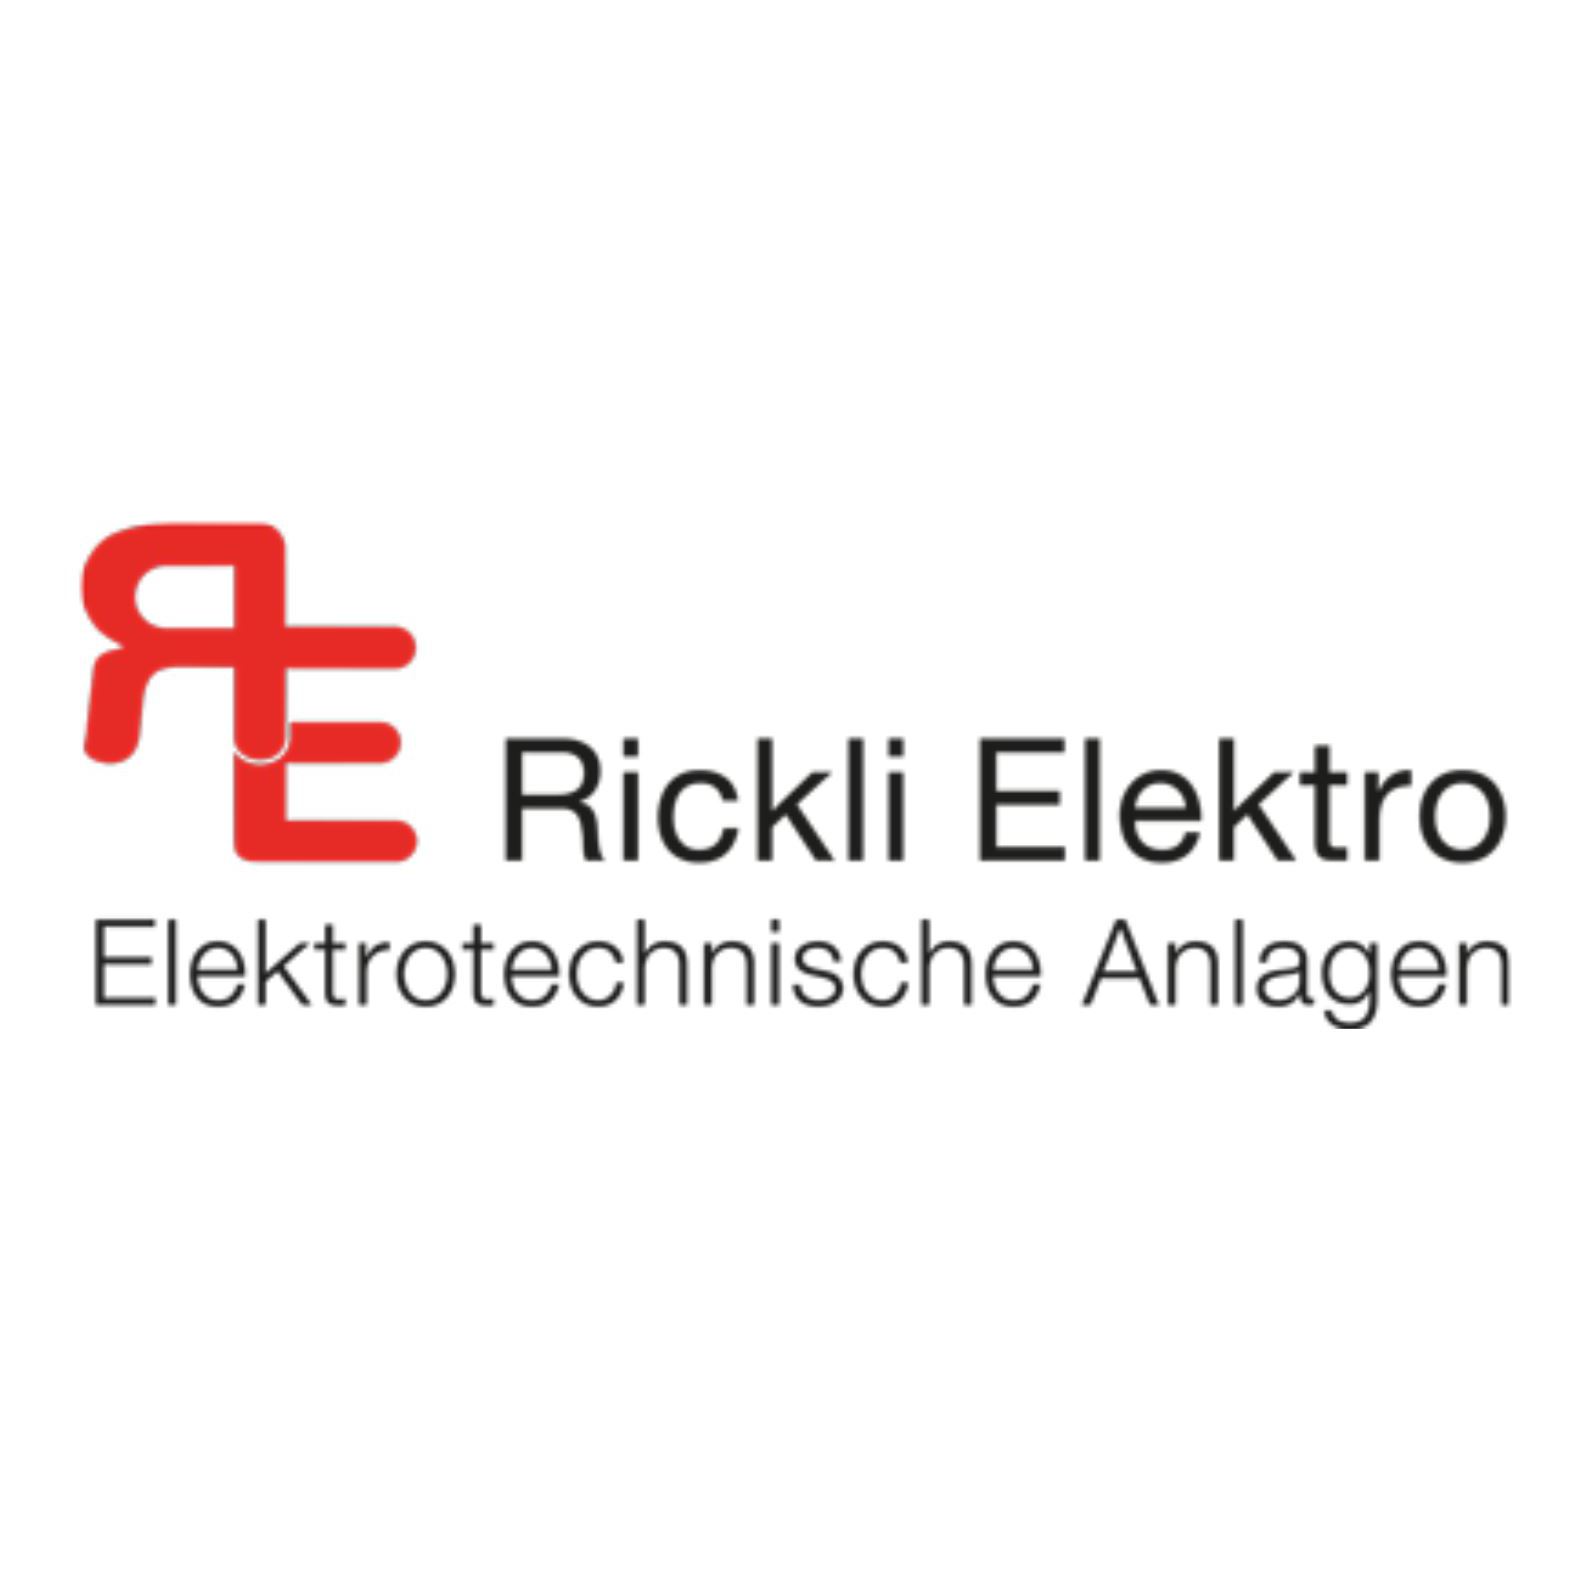 Rickli Elektro GmbH Logo